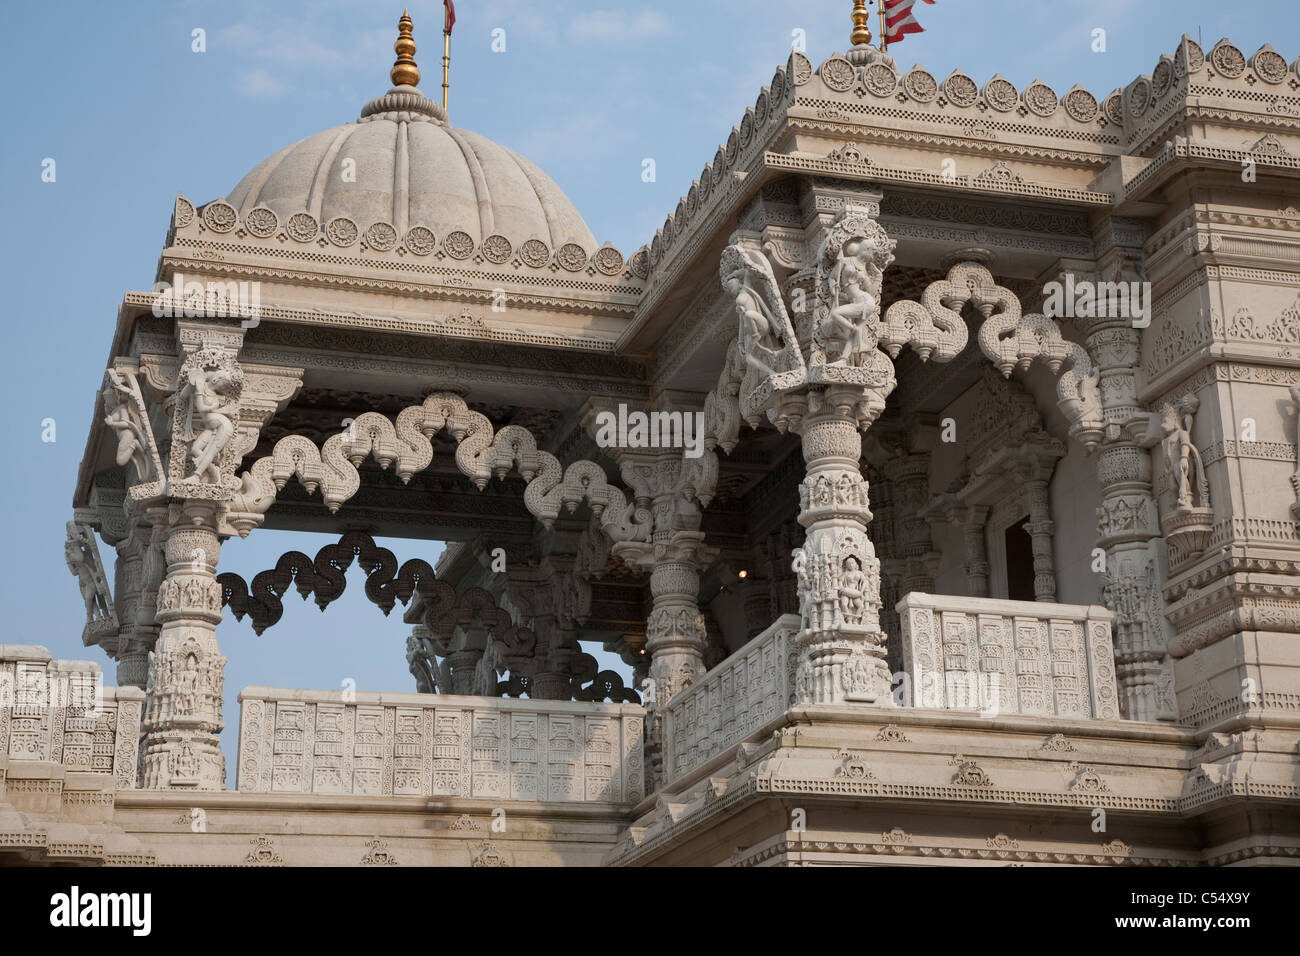 Shri Swaminarayan Mandir Temple Hindou de Neasden, London, UK Banque D'Images